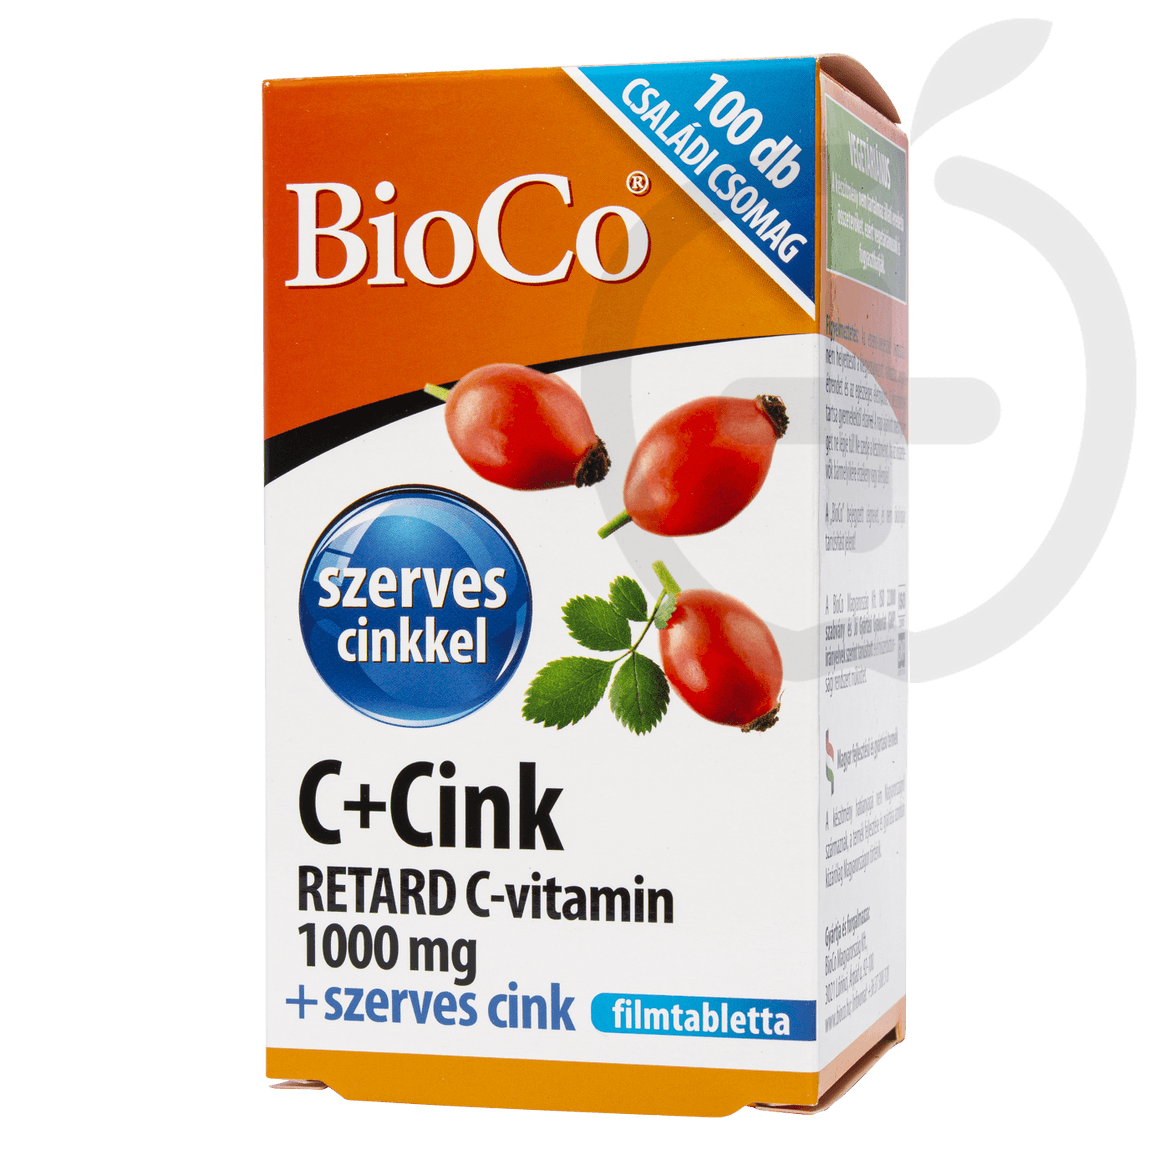 BioCo C+Cink Retard C-vitamin 1000 mg + szerves cink filmtabletta